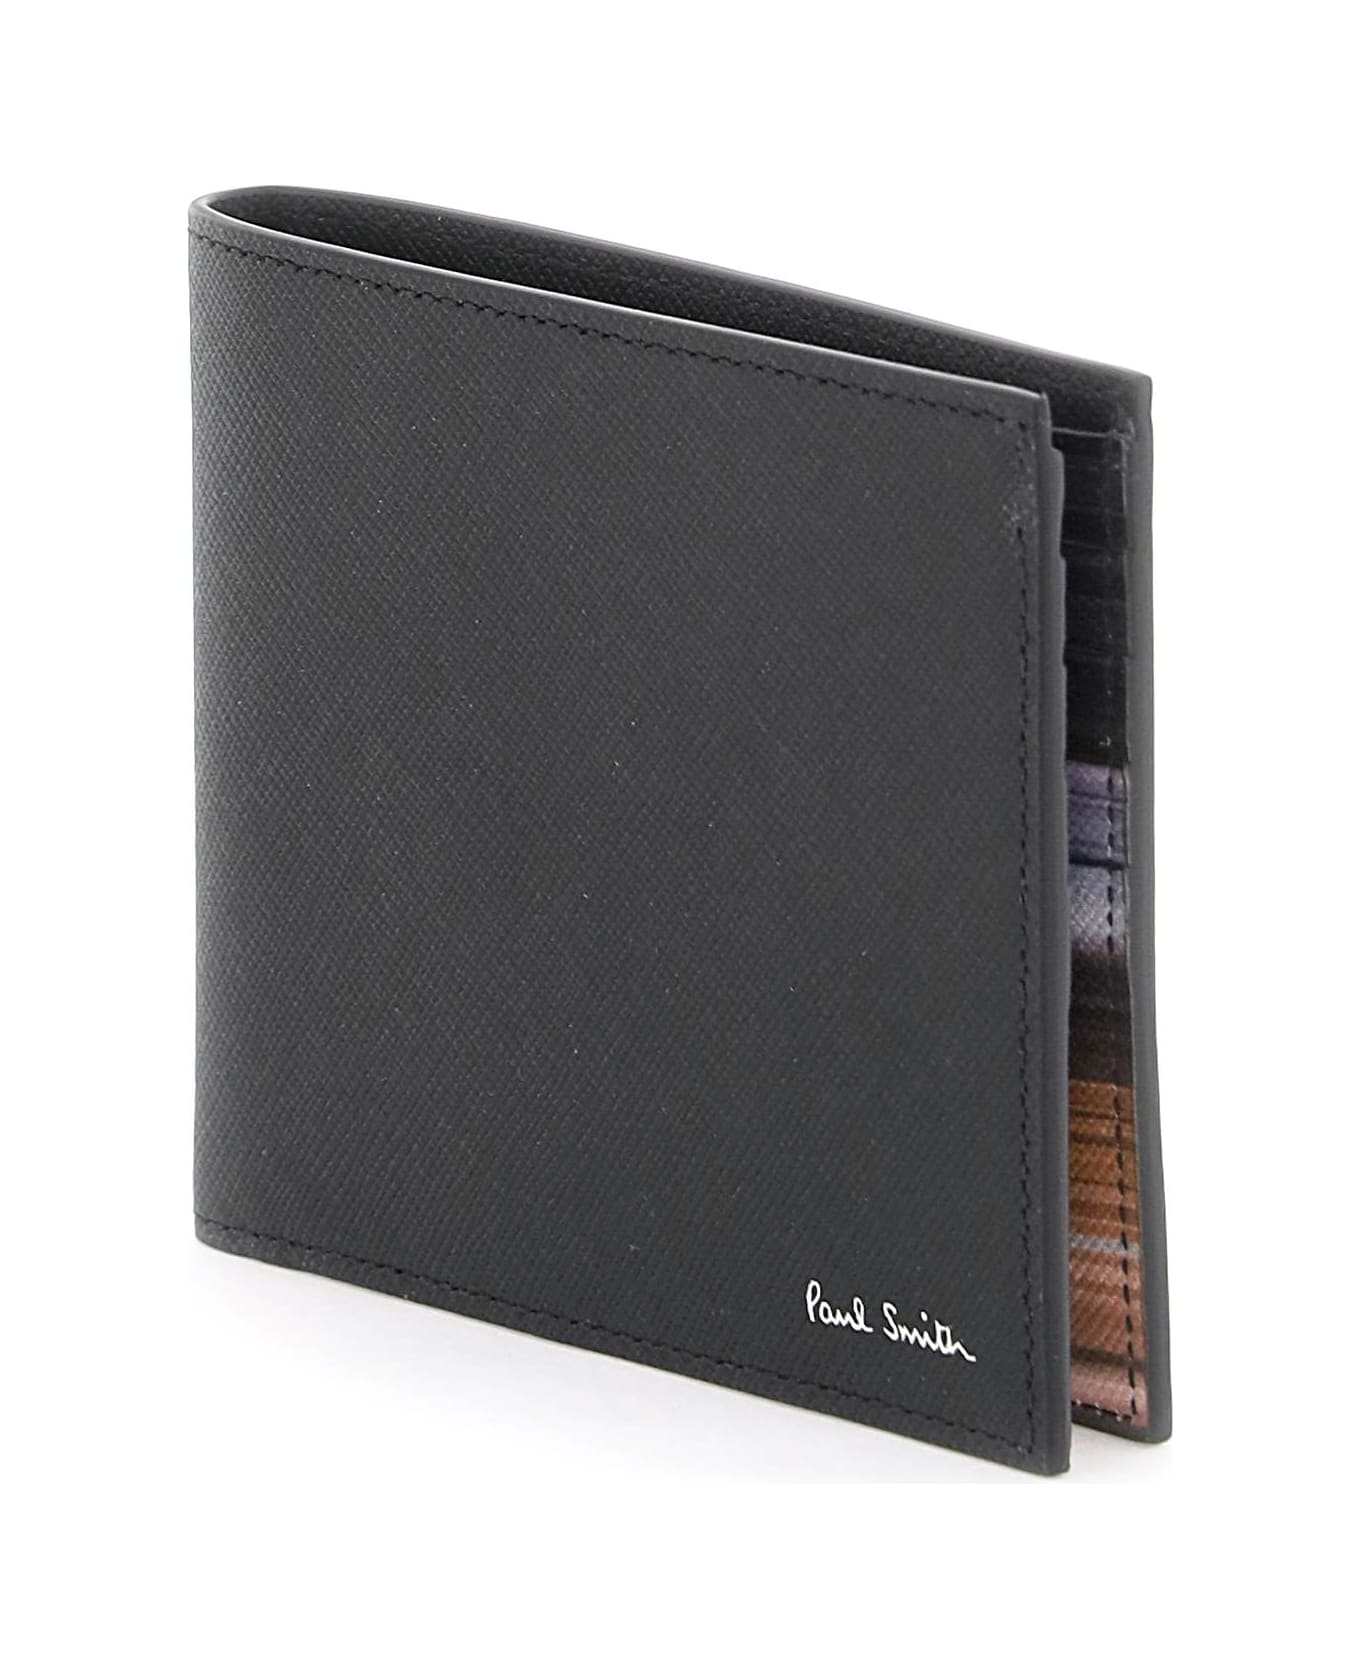 Paul Smith Mini Blur Wallet - Black